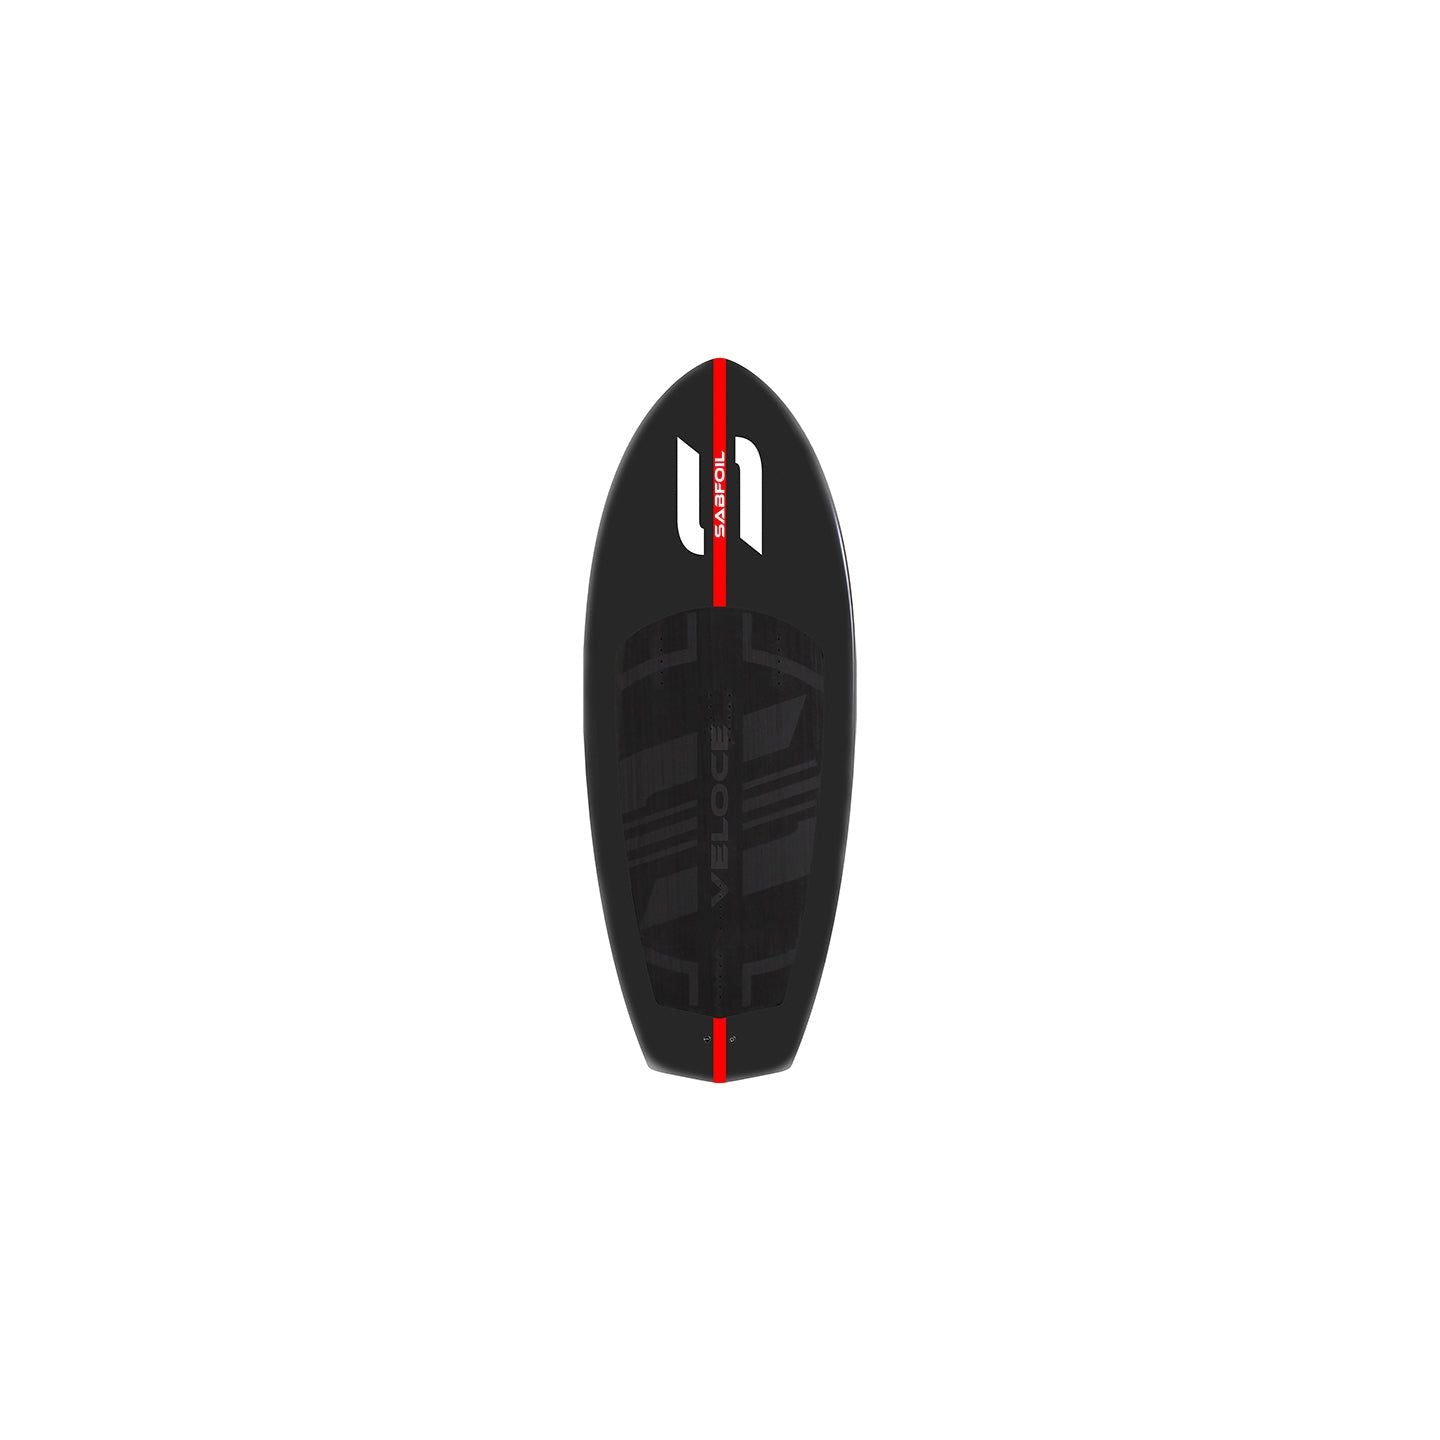 Sabfoil Veloce 80L Freeride Pro Foilboard | Hydrofoil Board